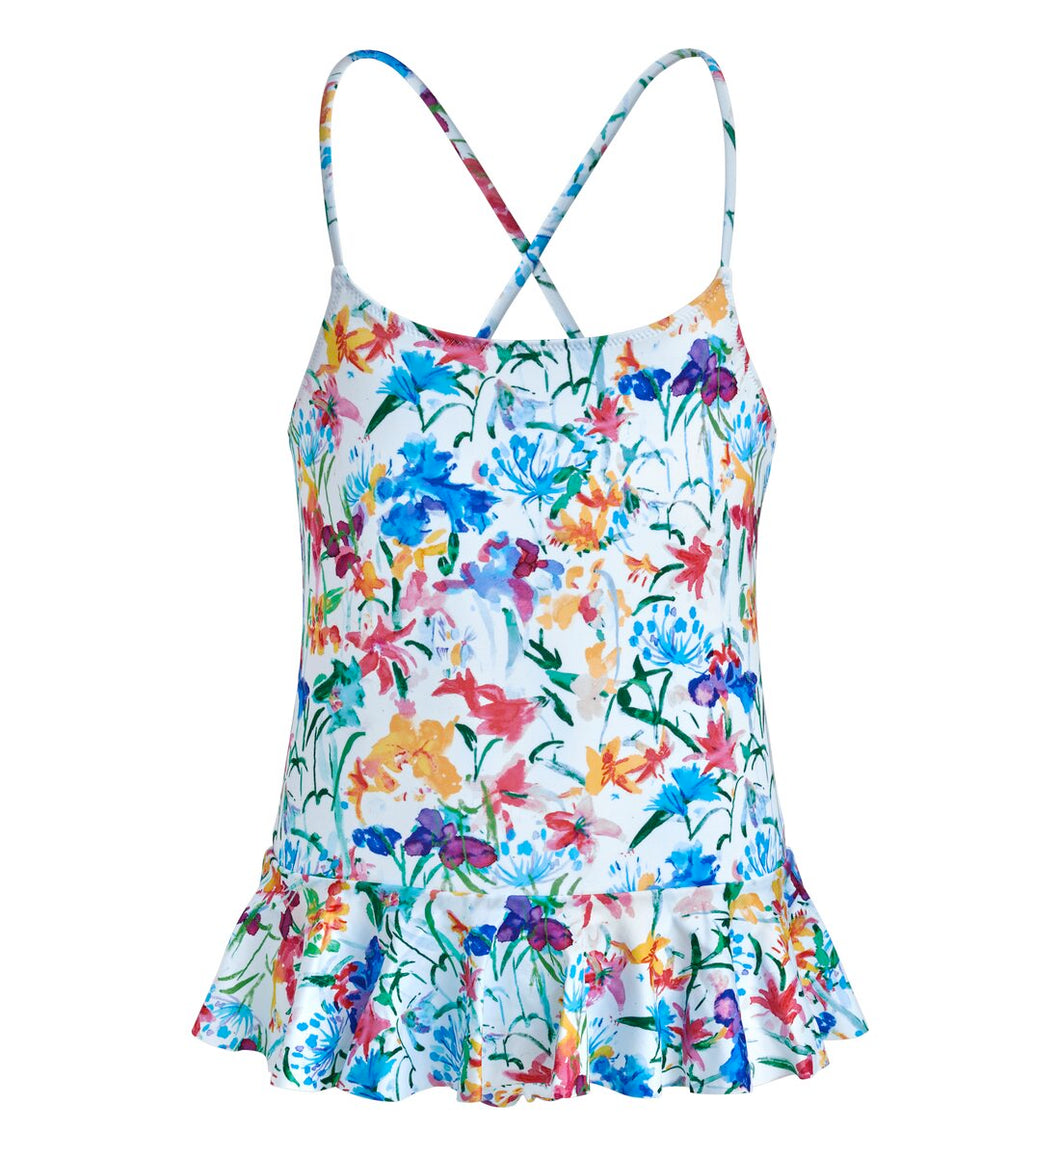 Girls Skirt One-piece Swimsuit Happy Flowers